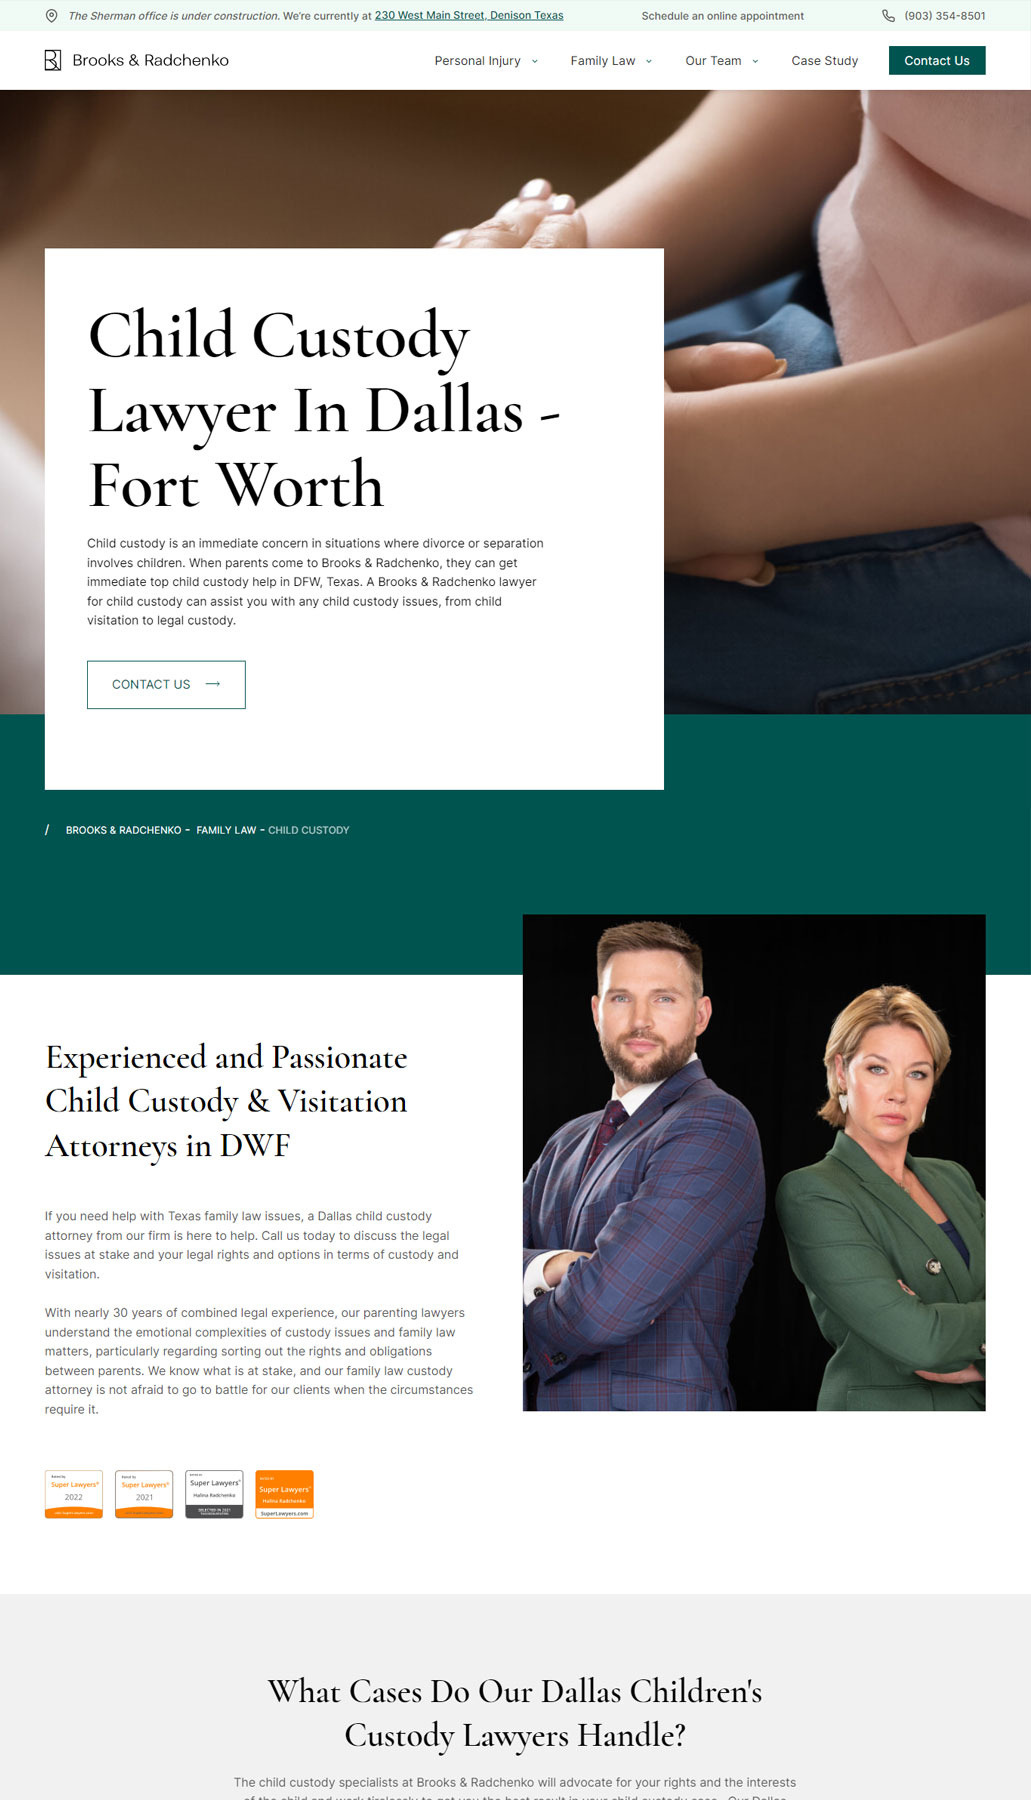 Child Custody Lawyers' Website Design